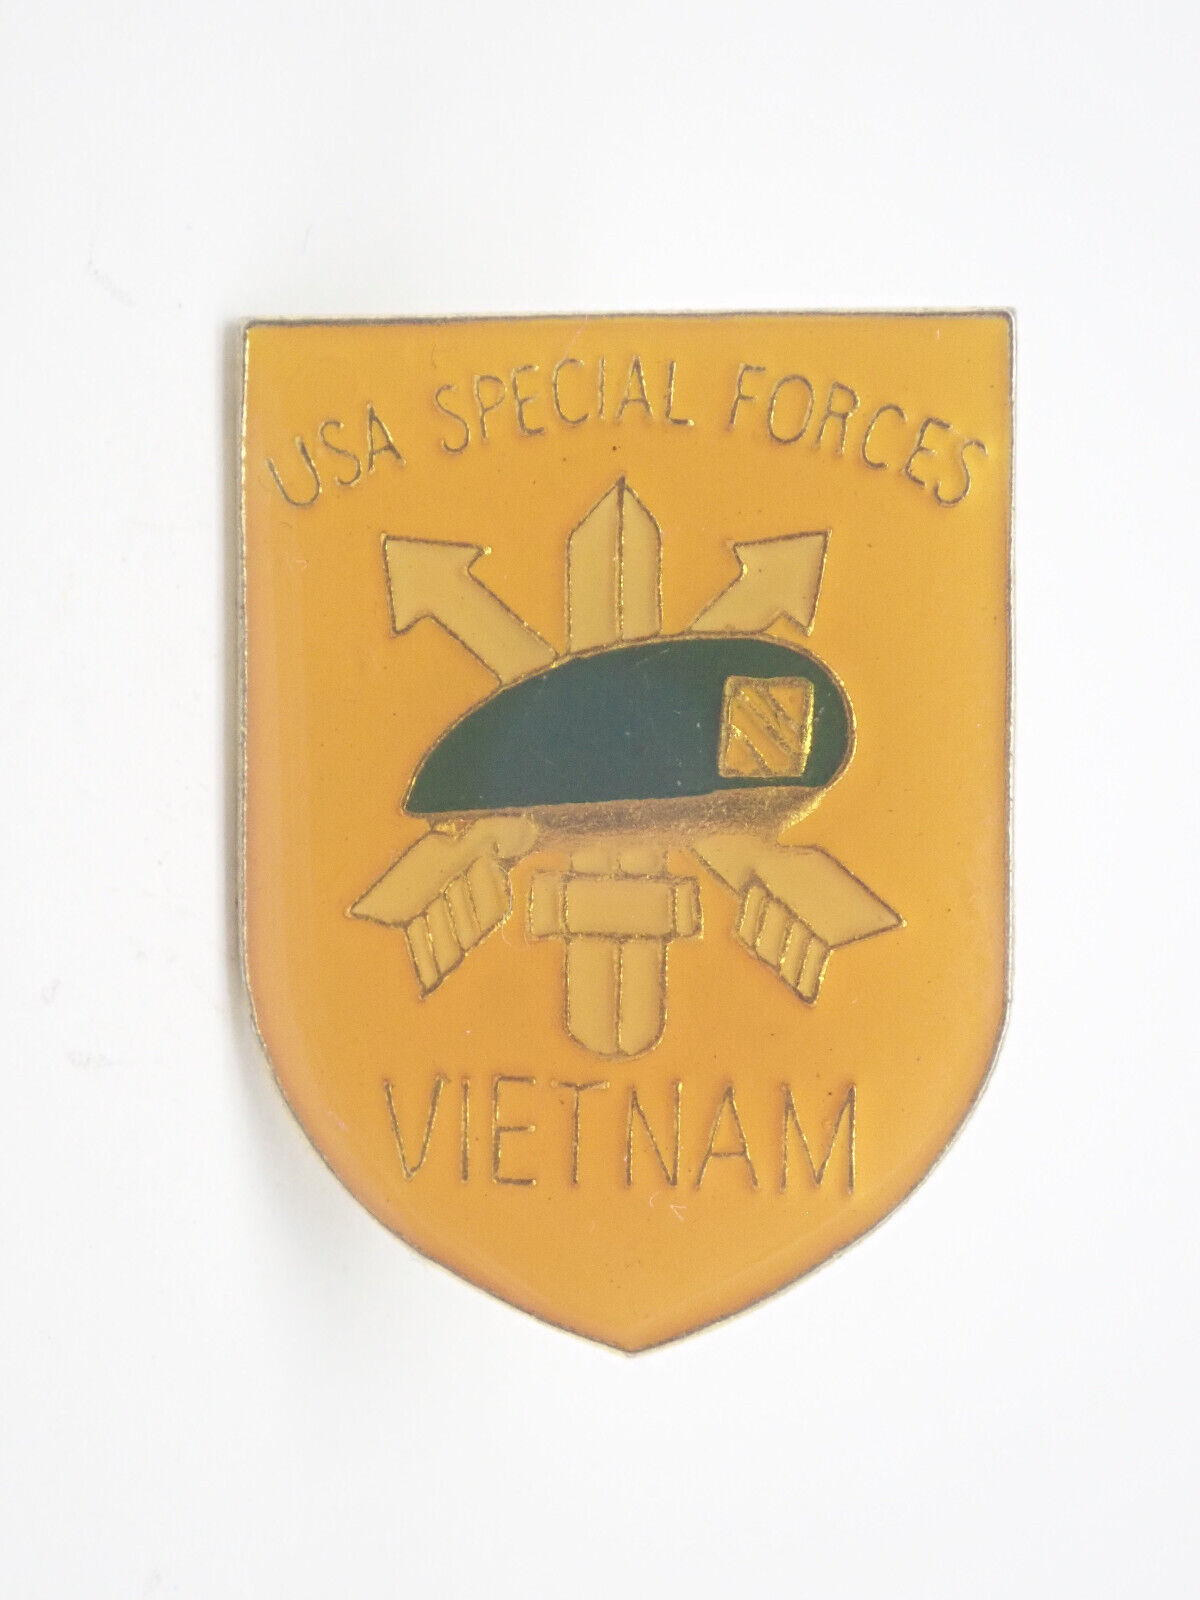 USA Special Forces Green Beret Vietnam Vintage Lapel Pin